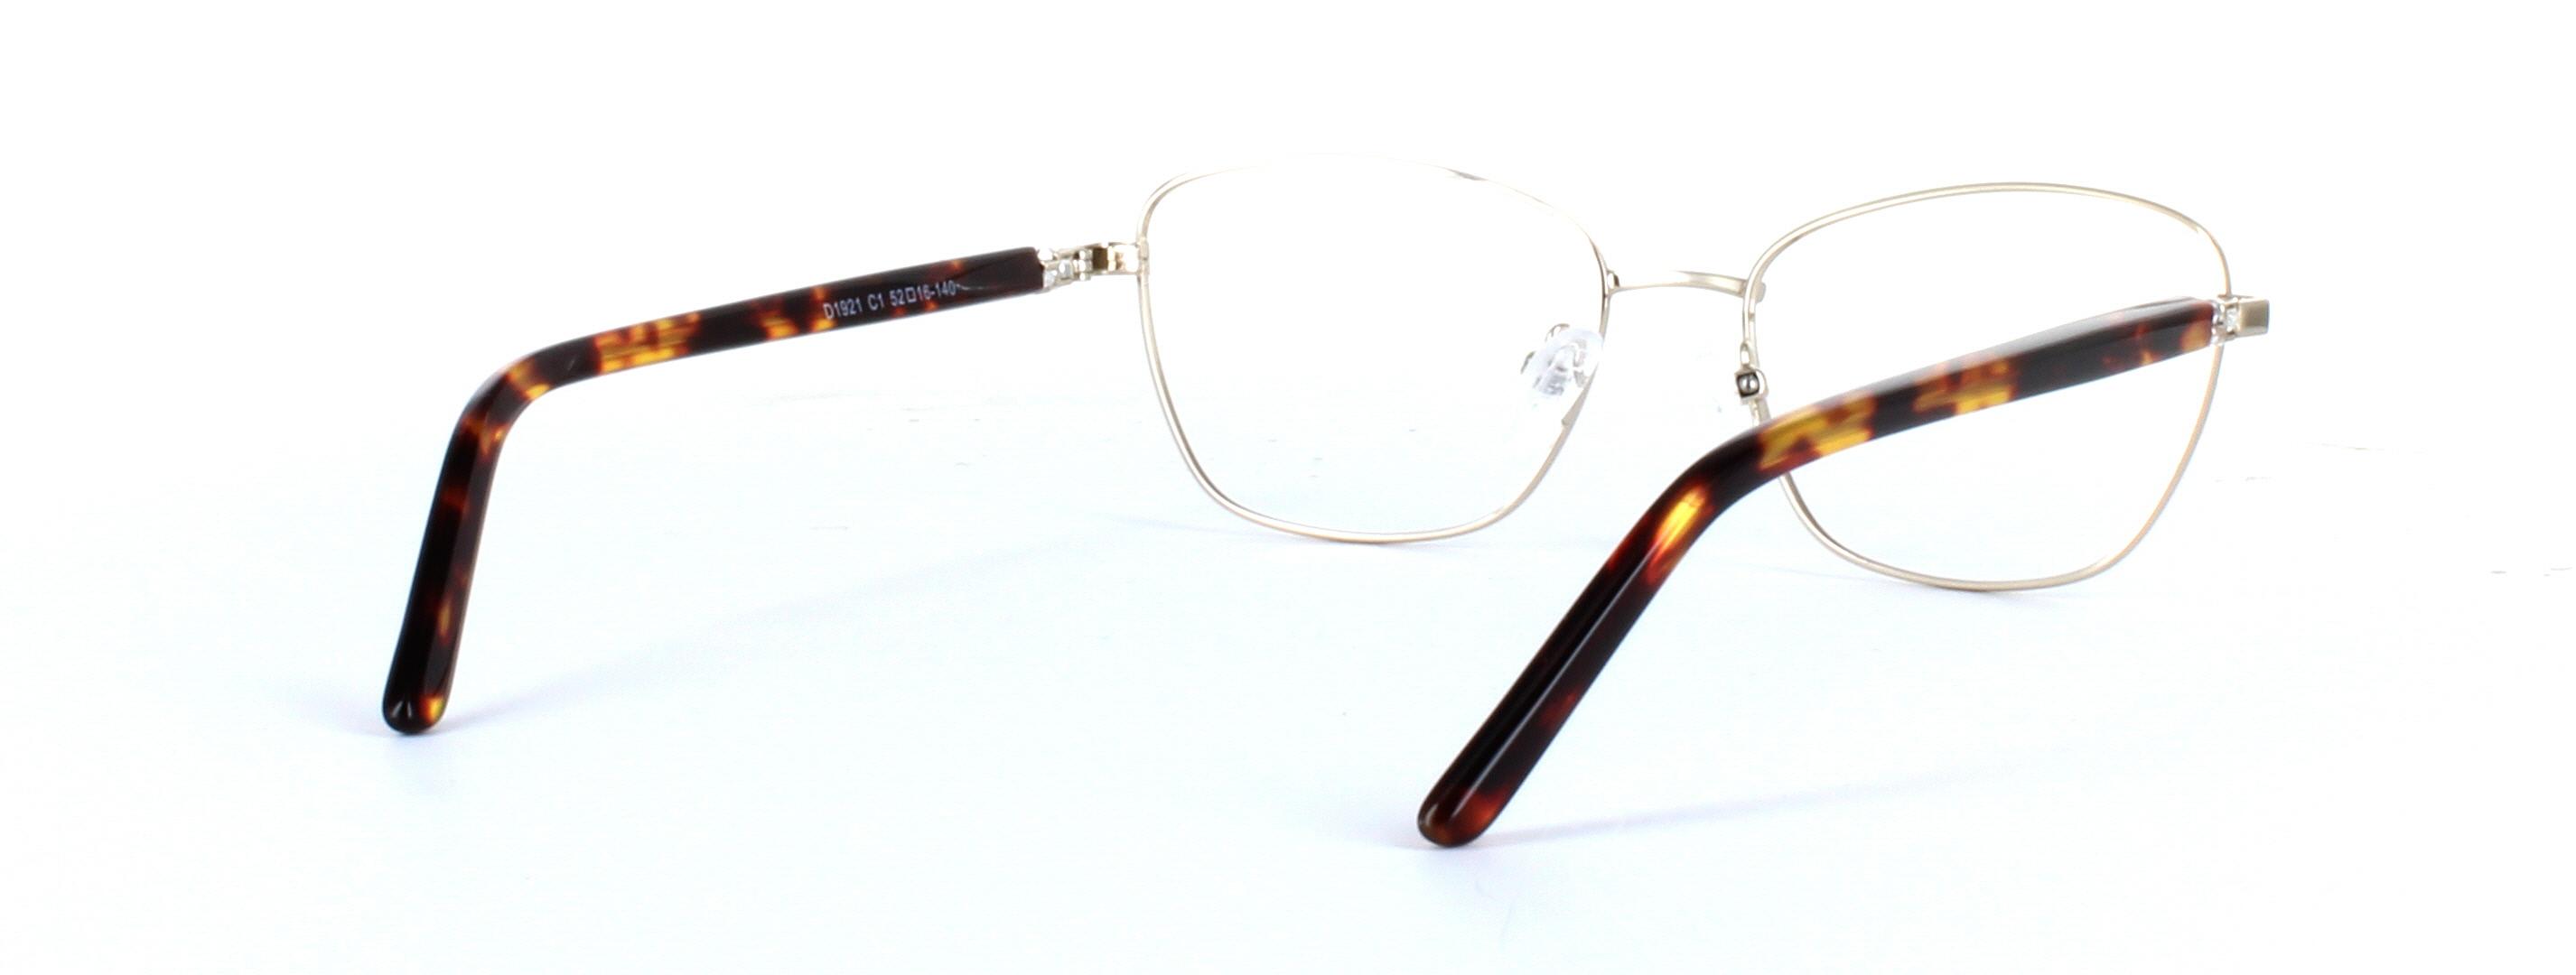 Zahra - Ladies glasses frame - image 4